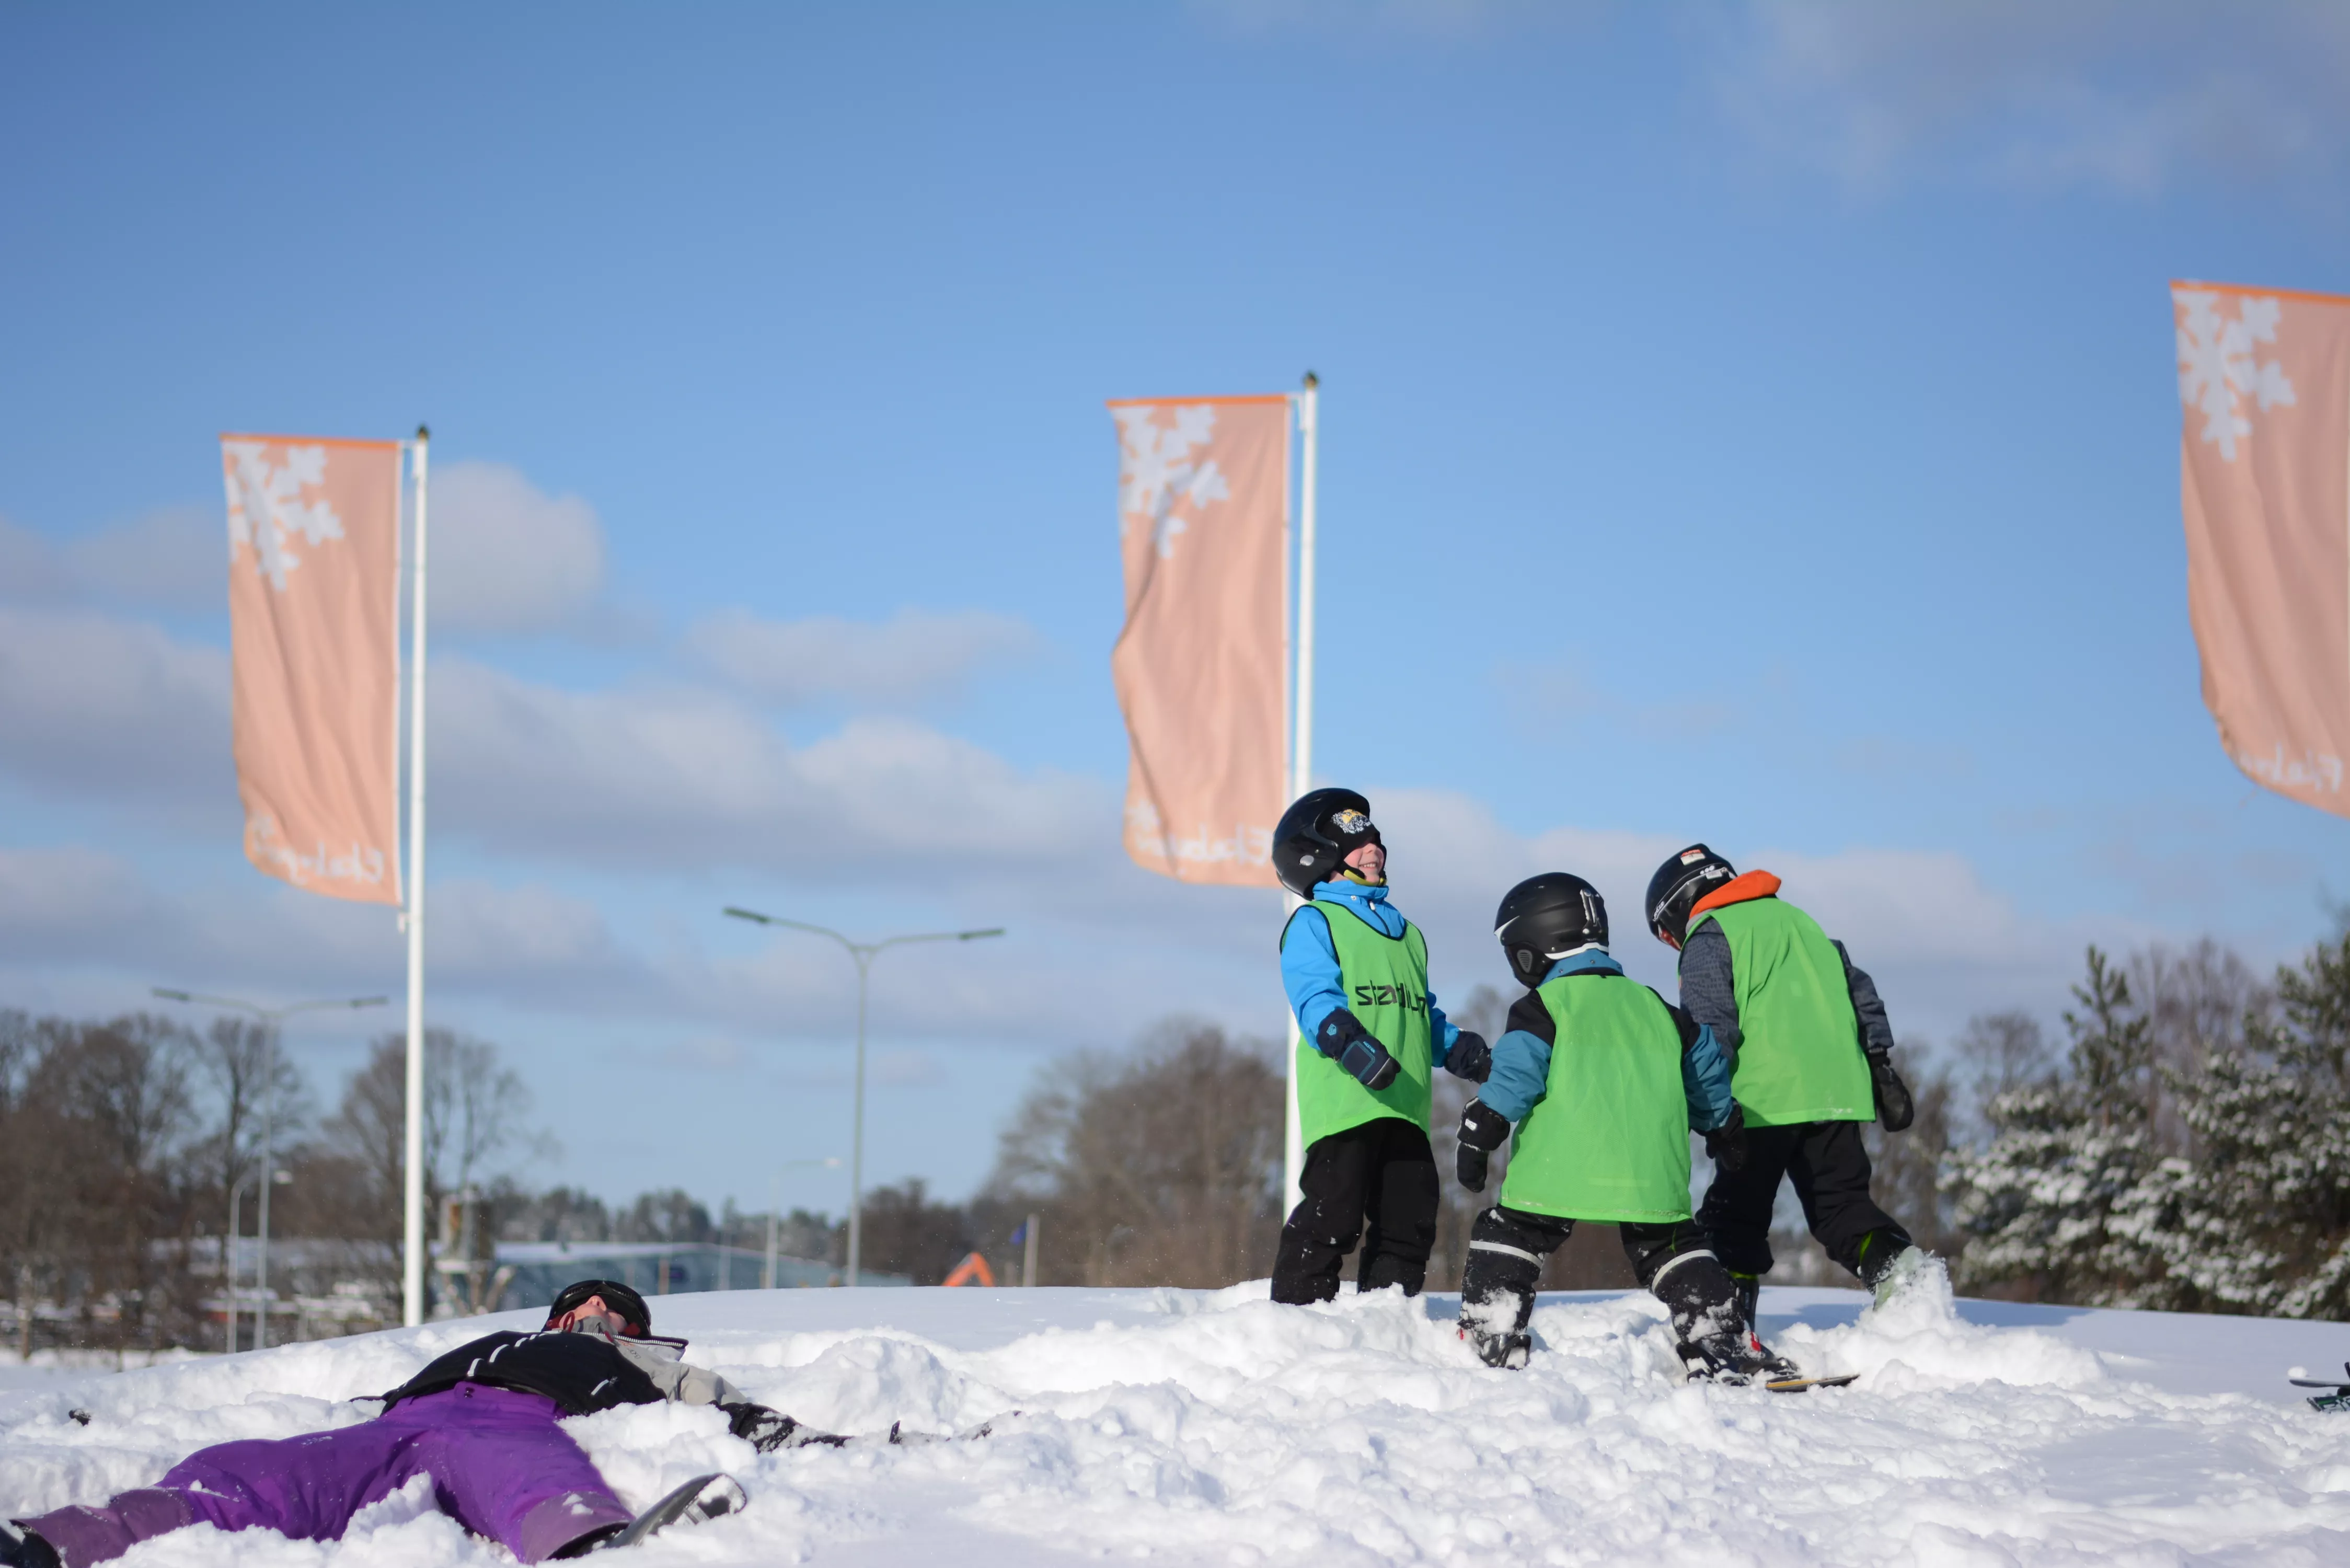 Ekebyhovsbacken in Sweden, Europe | Snowboarding,Skiing - Rated 0.7